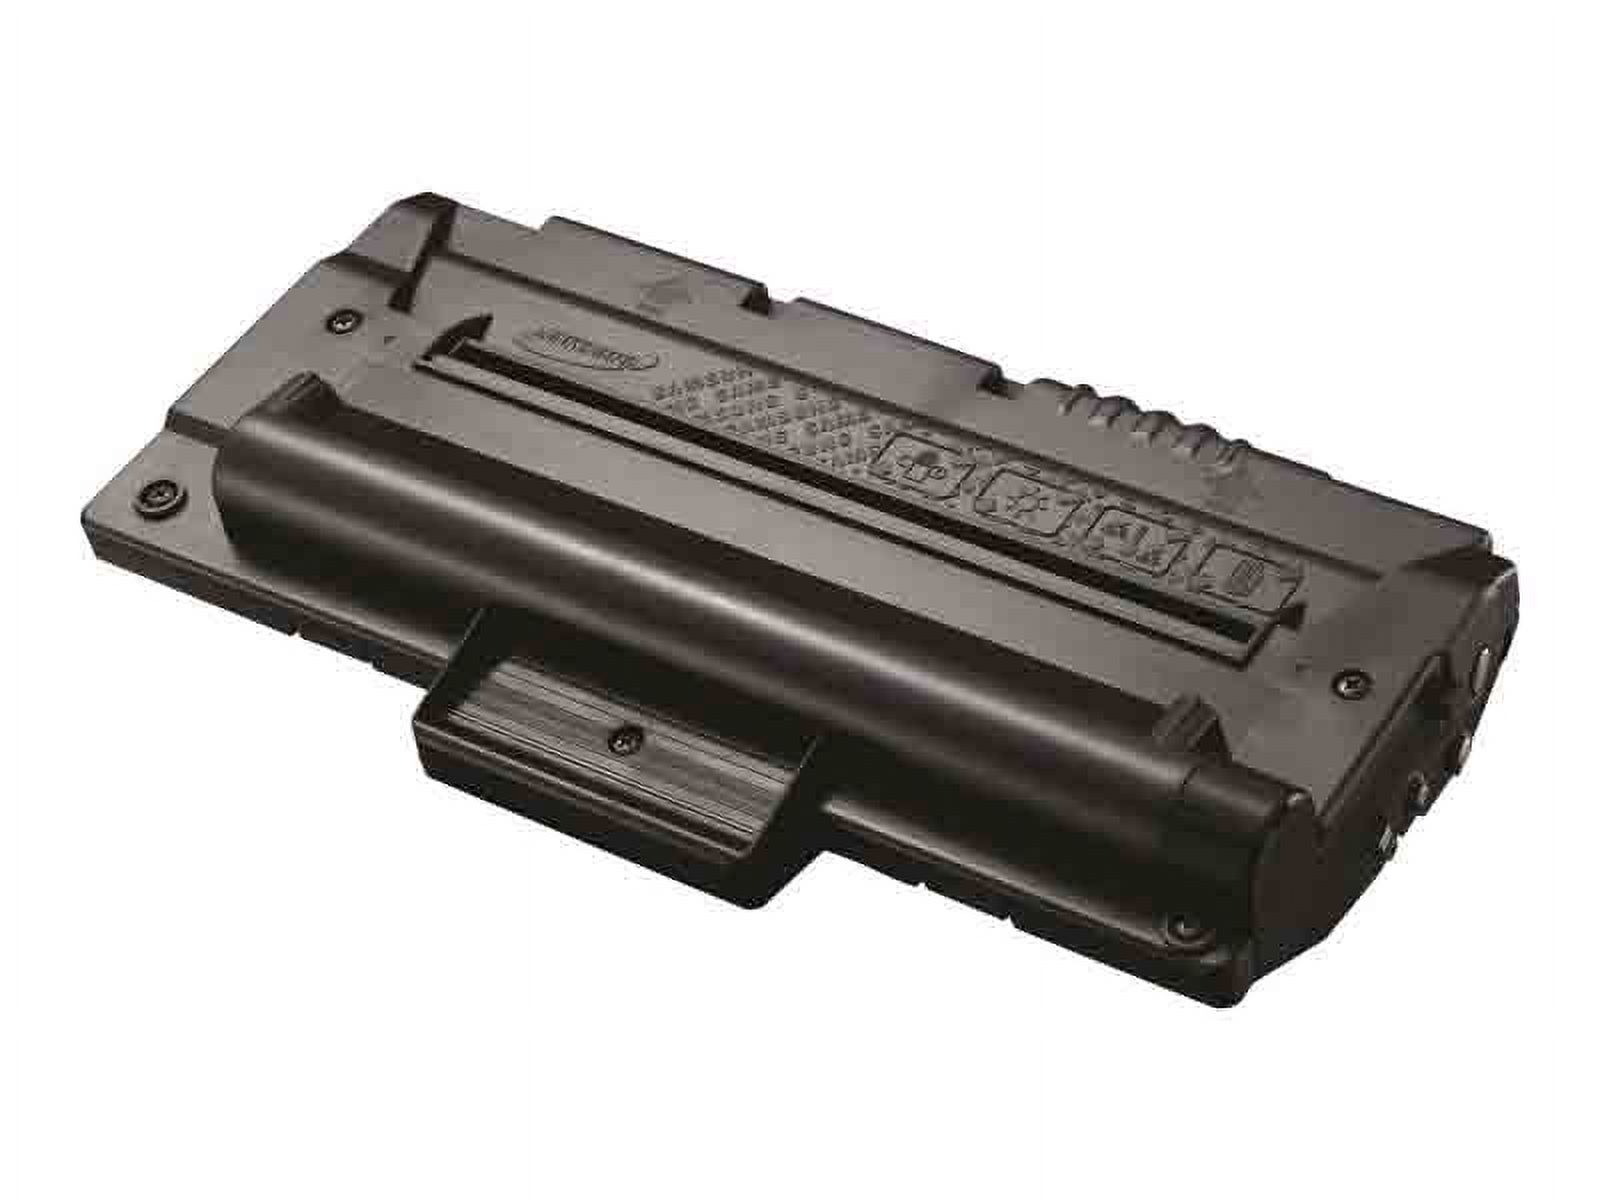 SAMSUNG SCX4200 Toner Cartridge (3,000 yield) - image 1 of 2